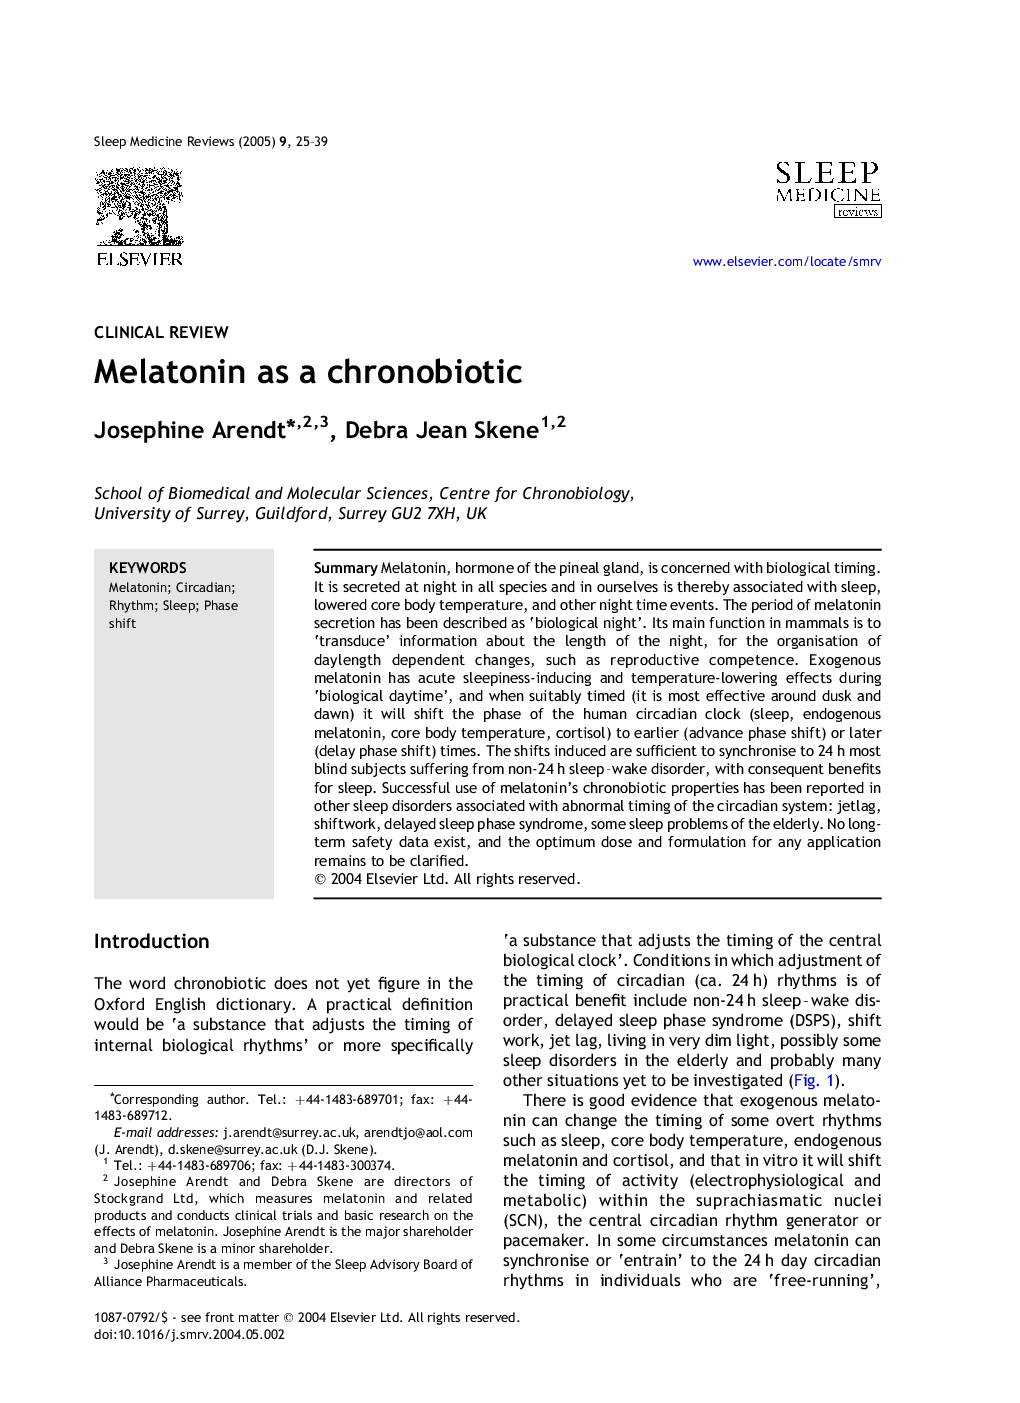 Melatonin as a chronobiotic